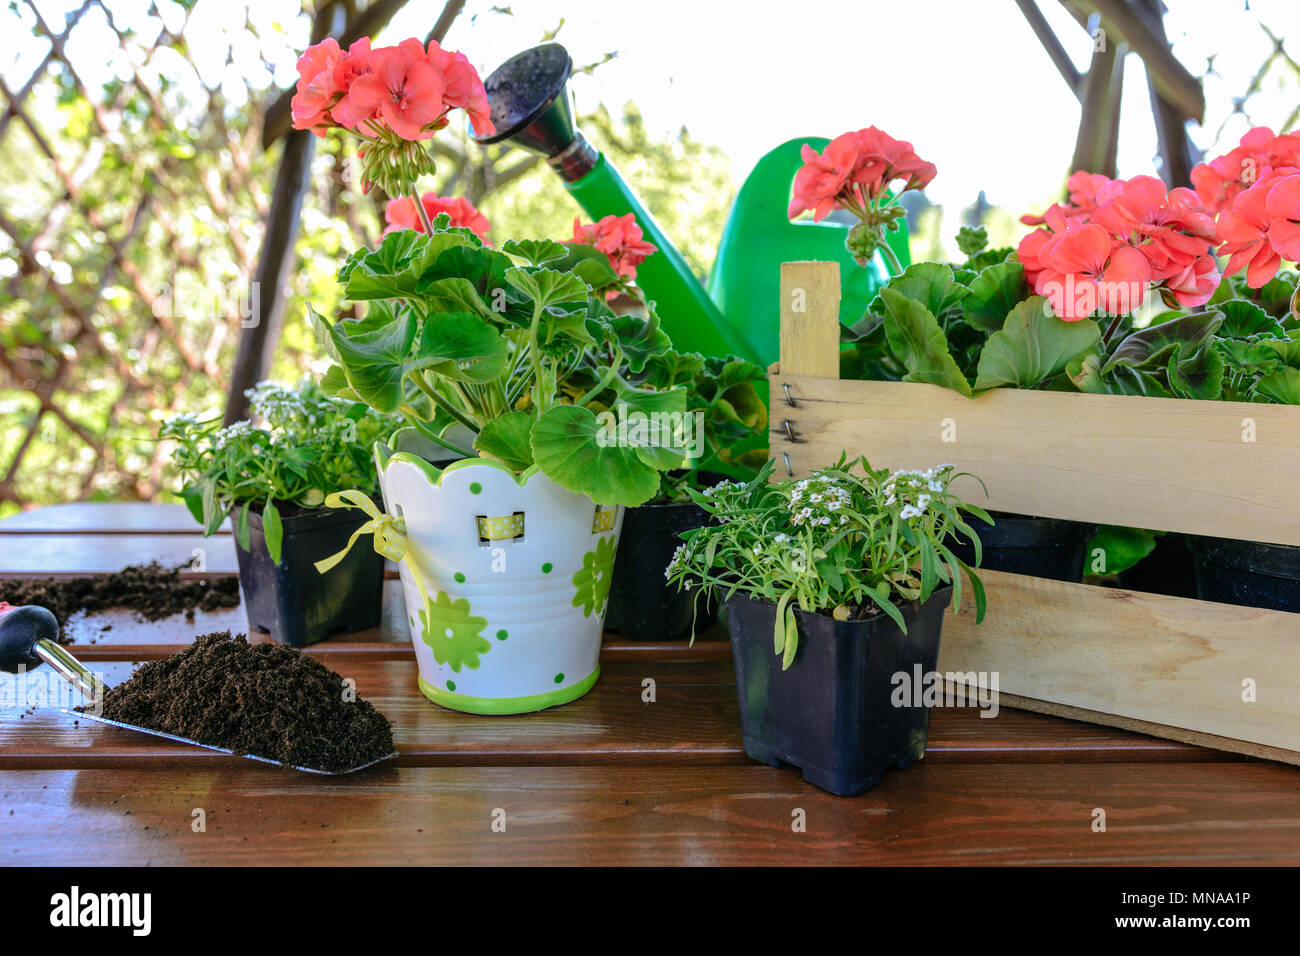 Concept of garden work - planting flowers in a garden gazebo. Stock Photo